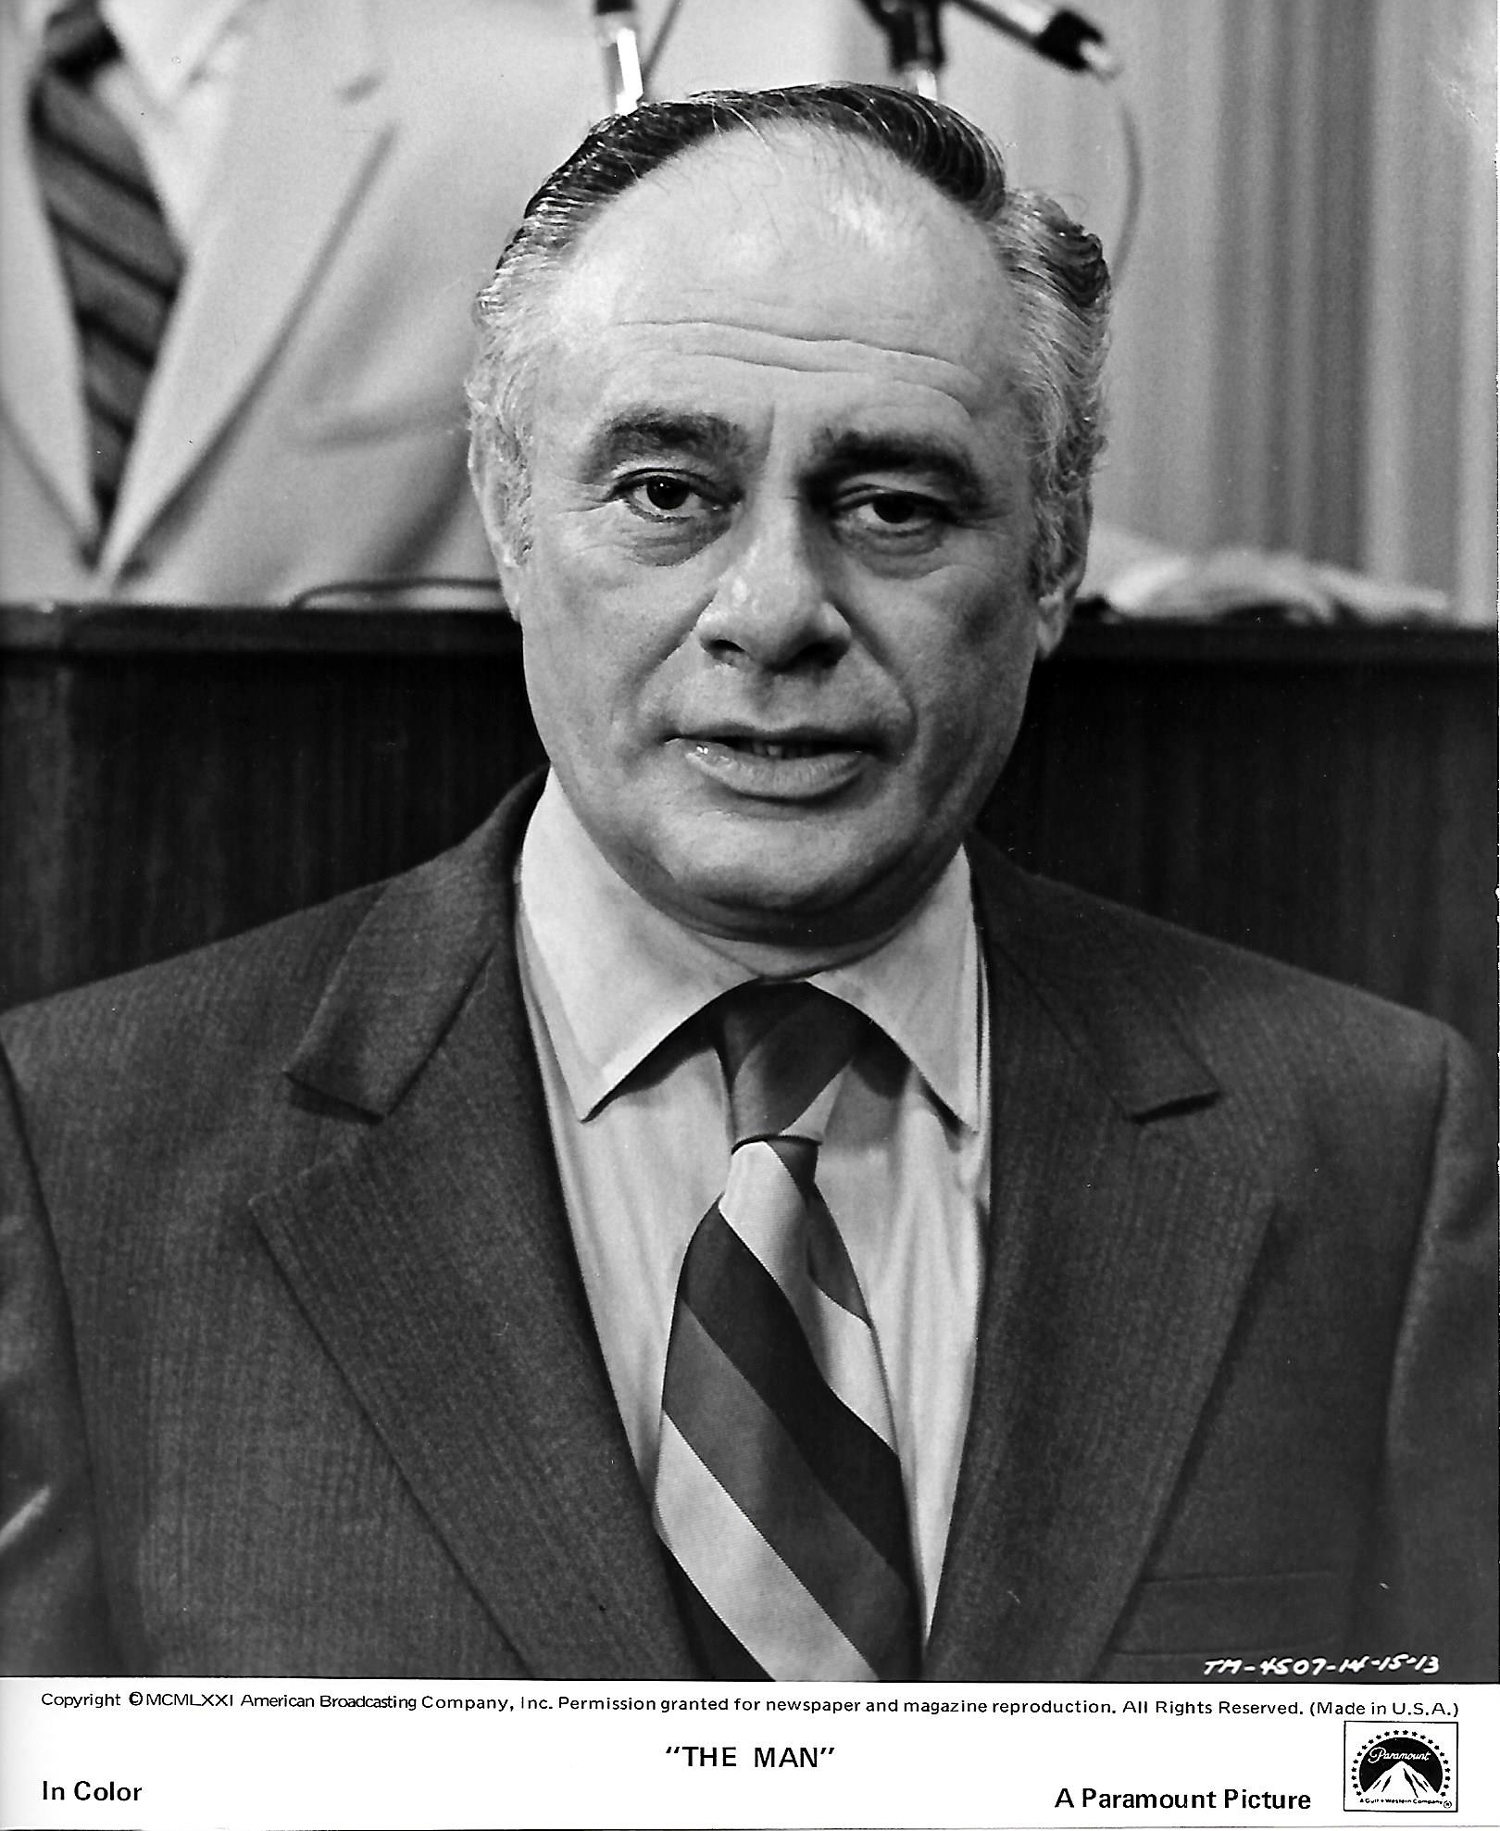  Martin Balsam, as “Jim Talley”, the aide 